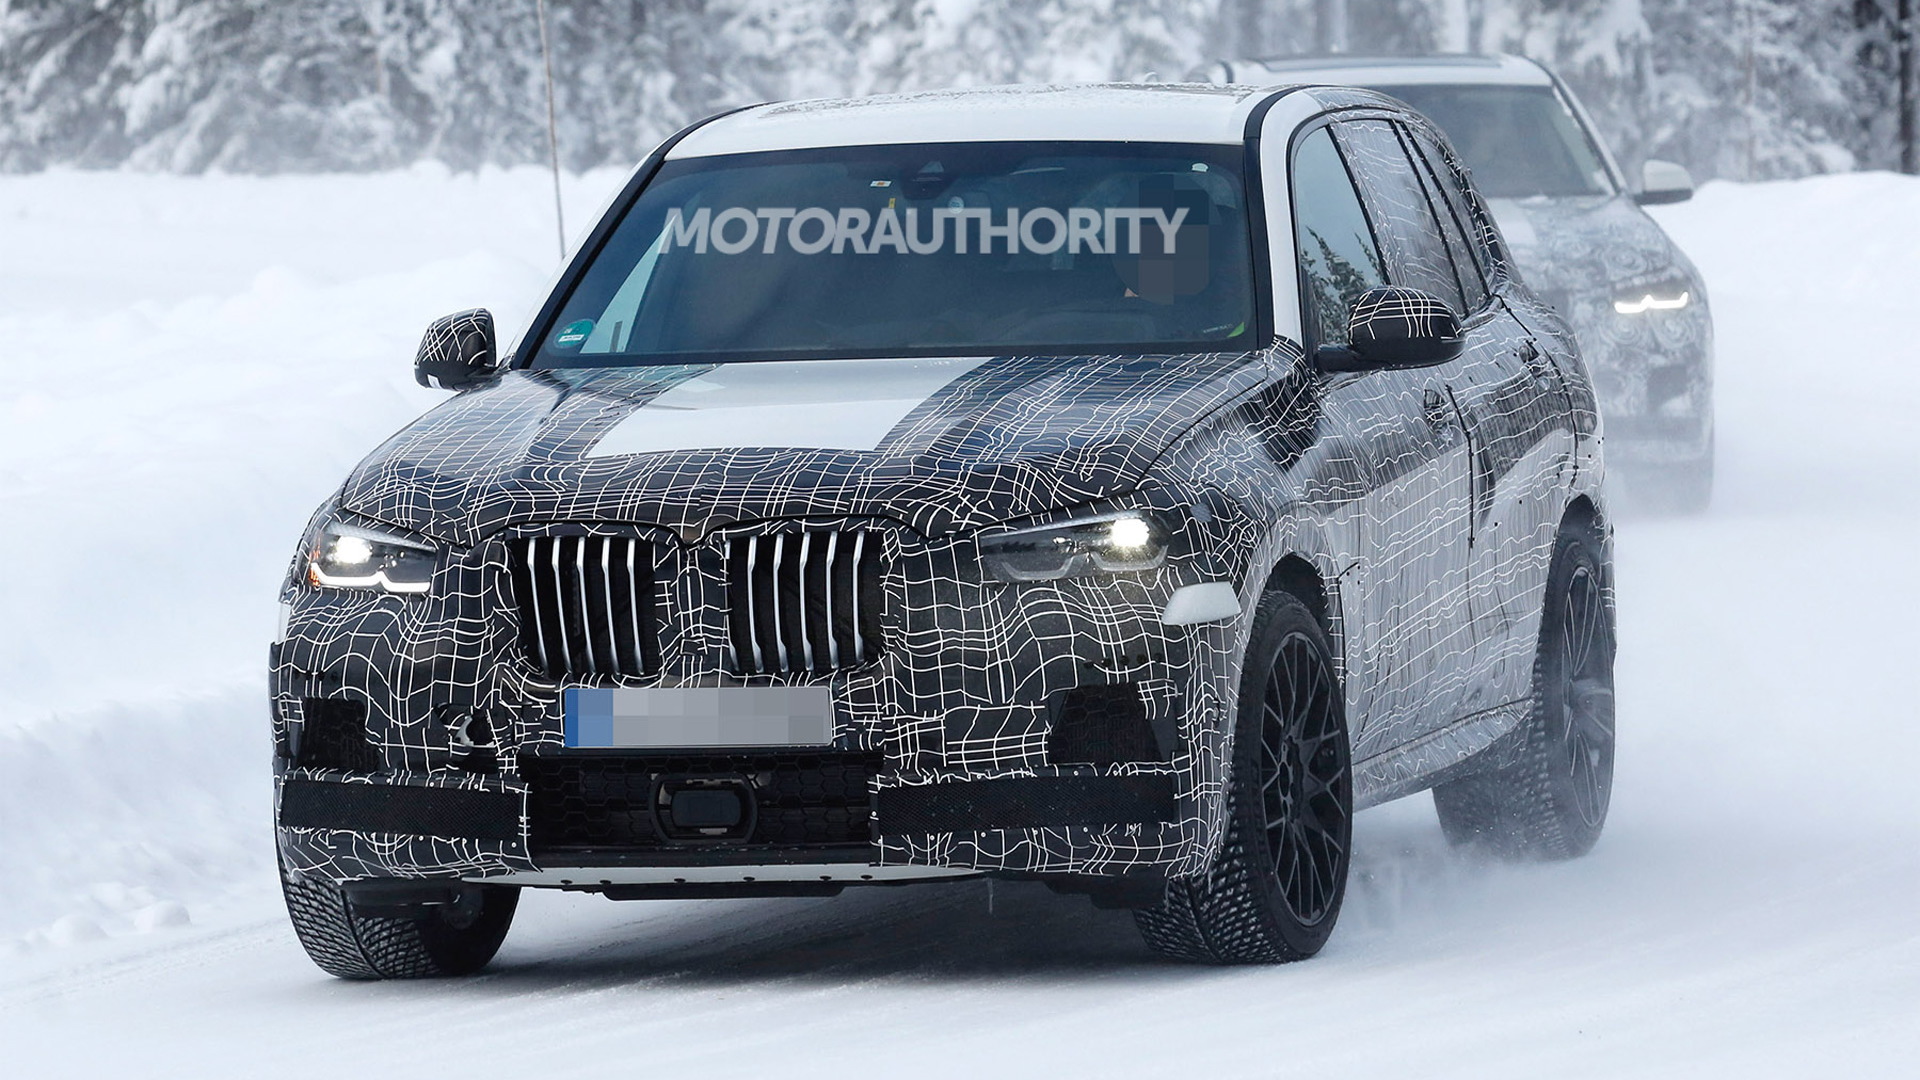 2020 BMW X5 M spy shots - Image via S. Baldauf/SB-Medien